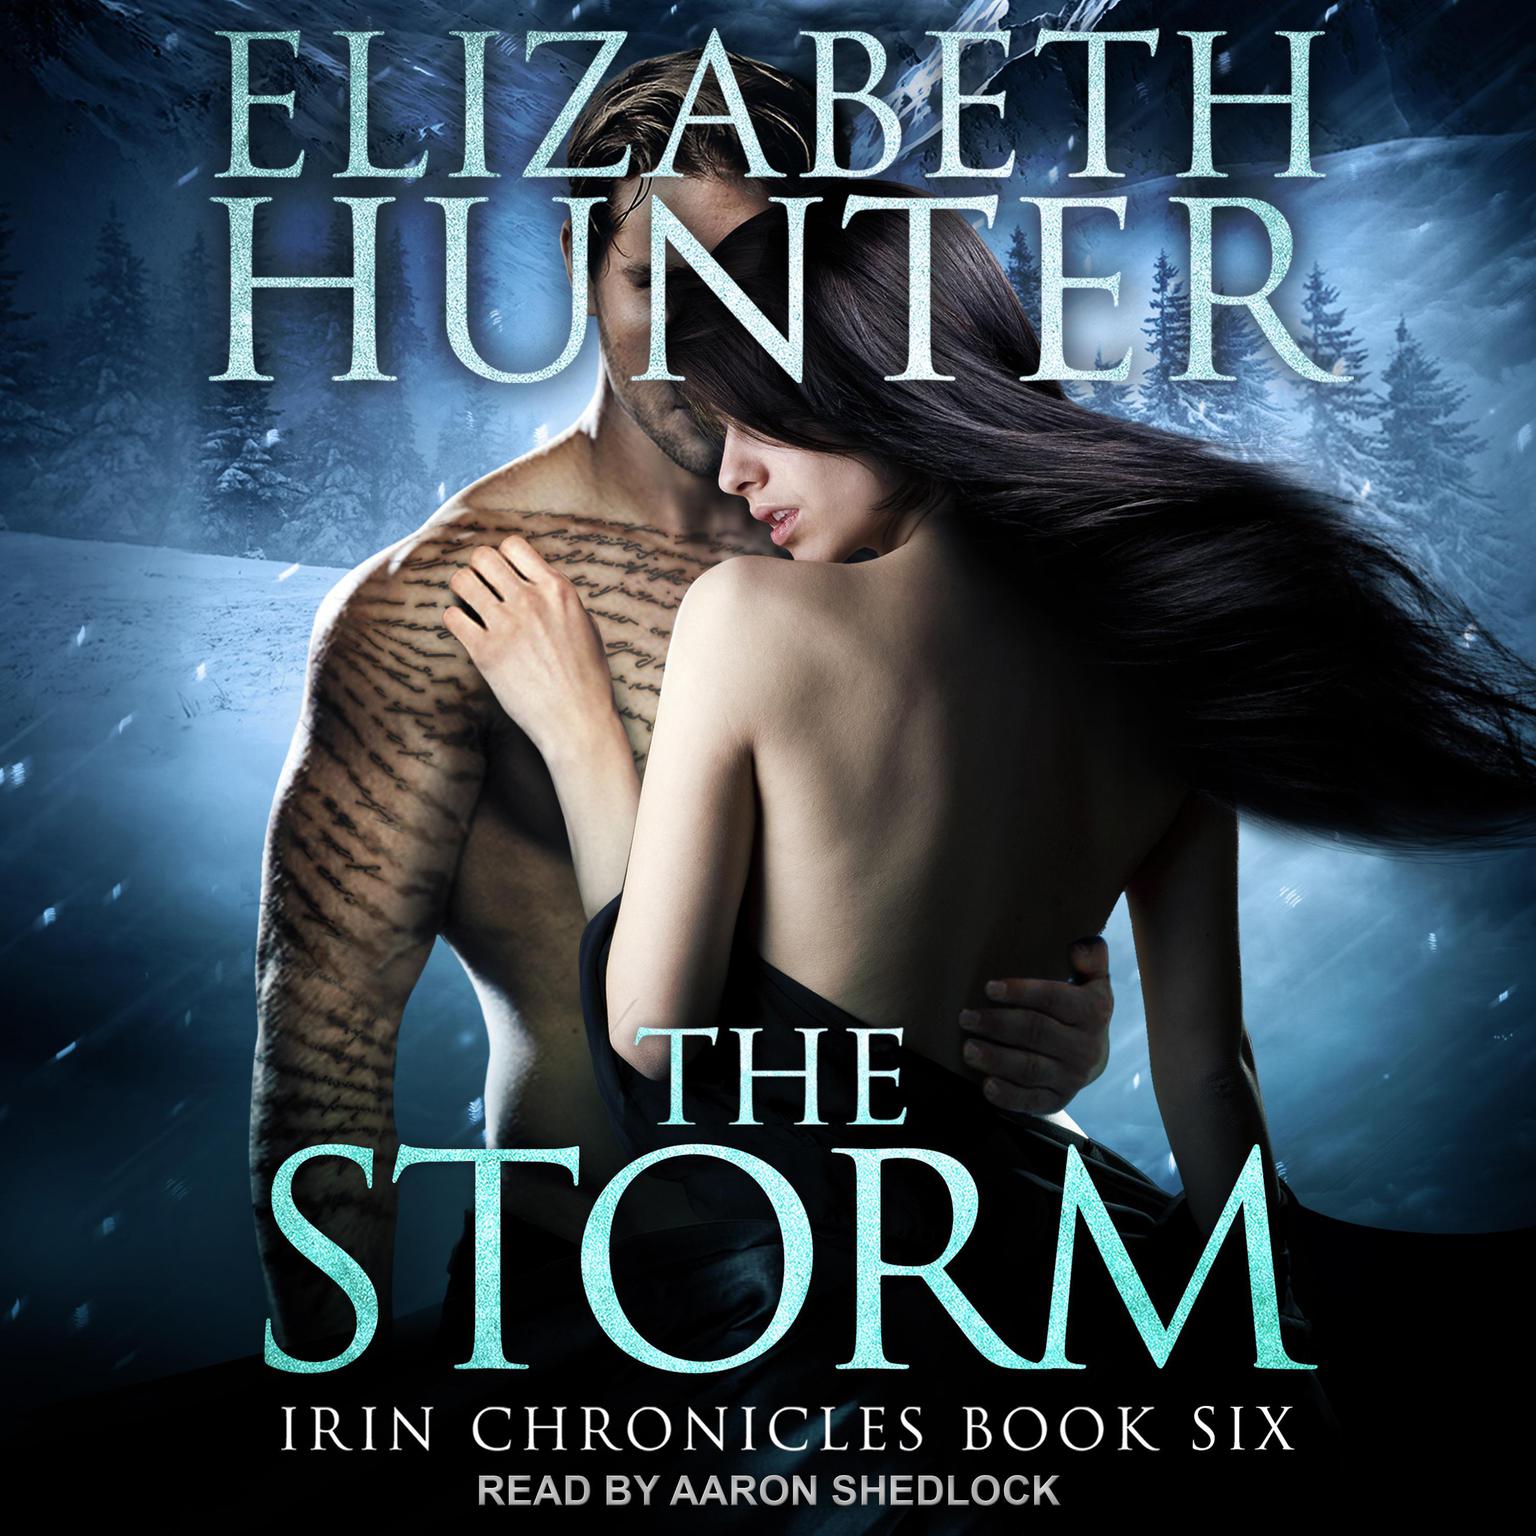 The Storm Audiobook, by Elizabeth Hunter